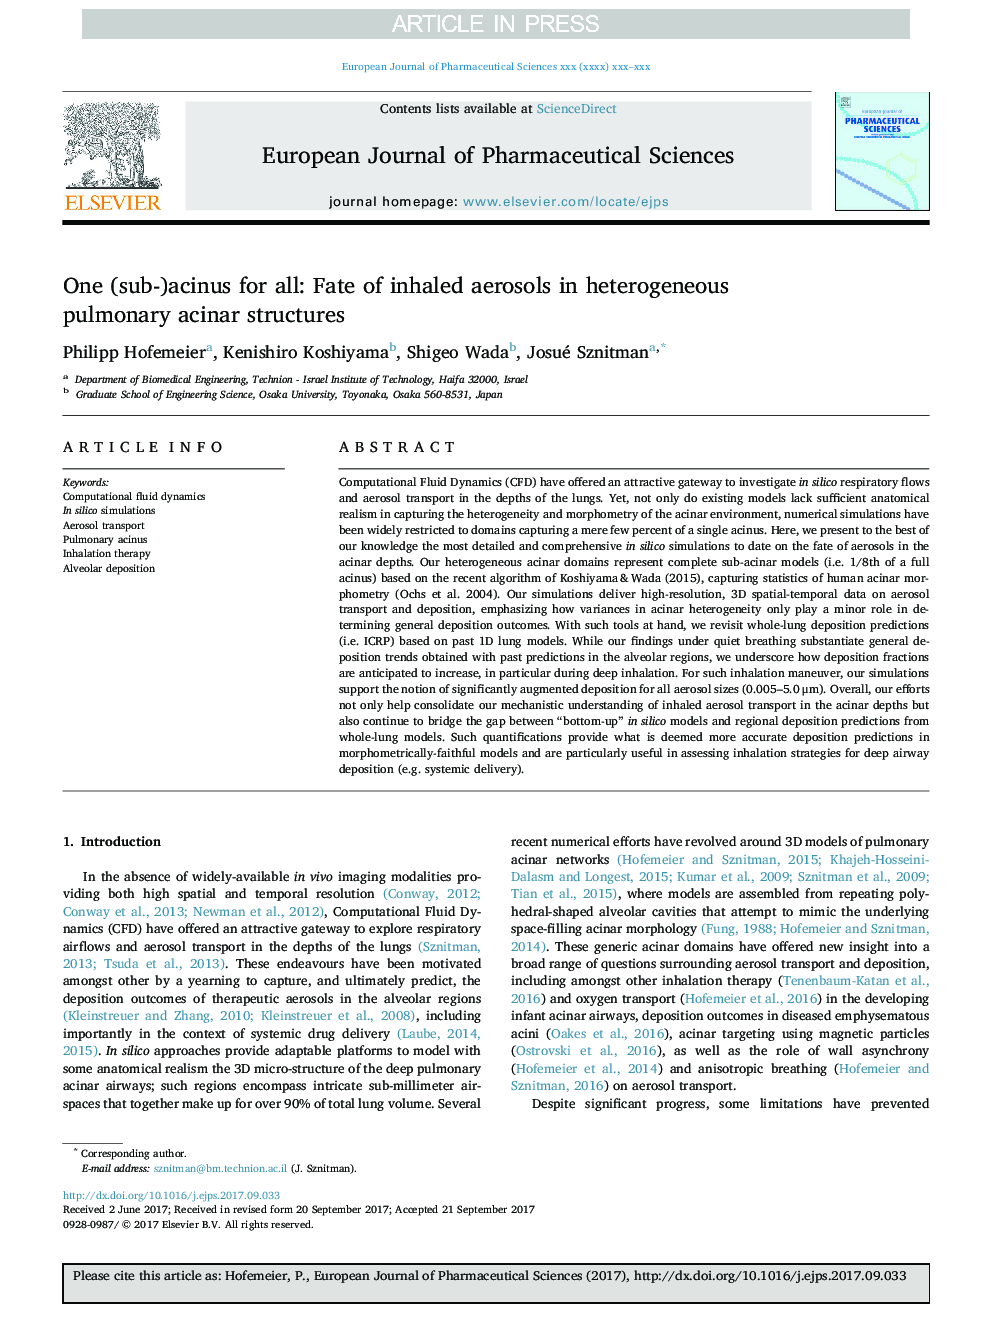 One (sub-)acinus for all: Fate of inhaled aerosols in heterogeneous pulmonary acinar structures